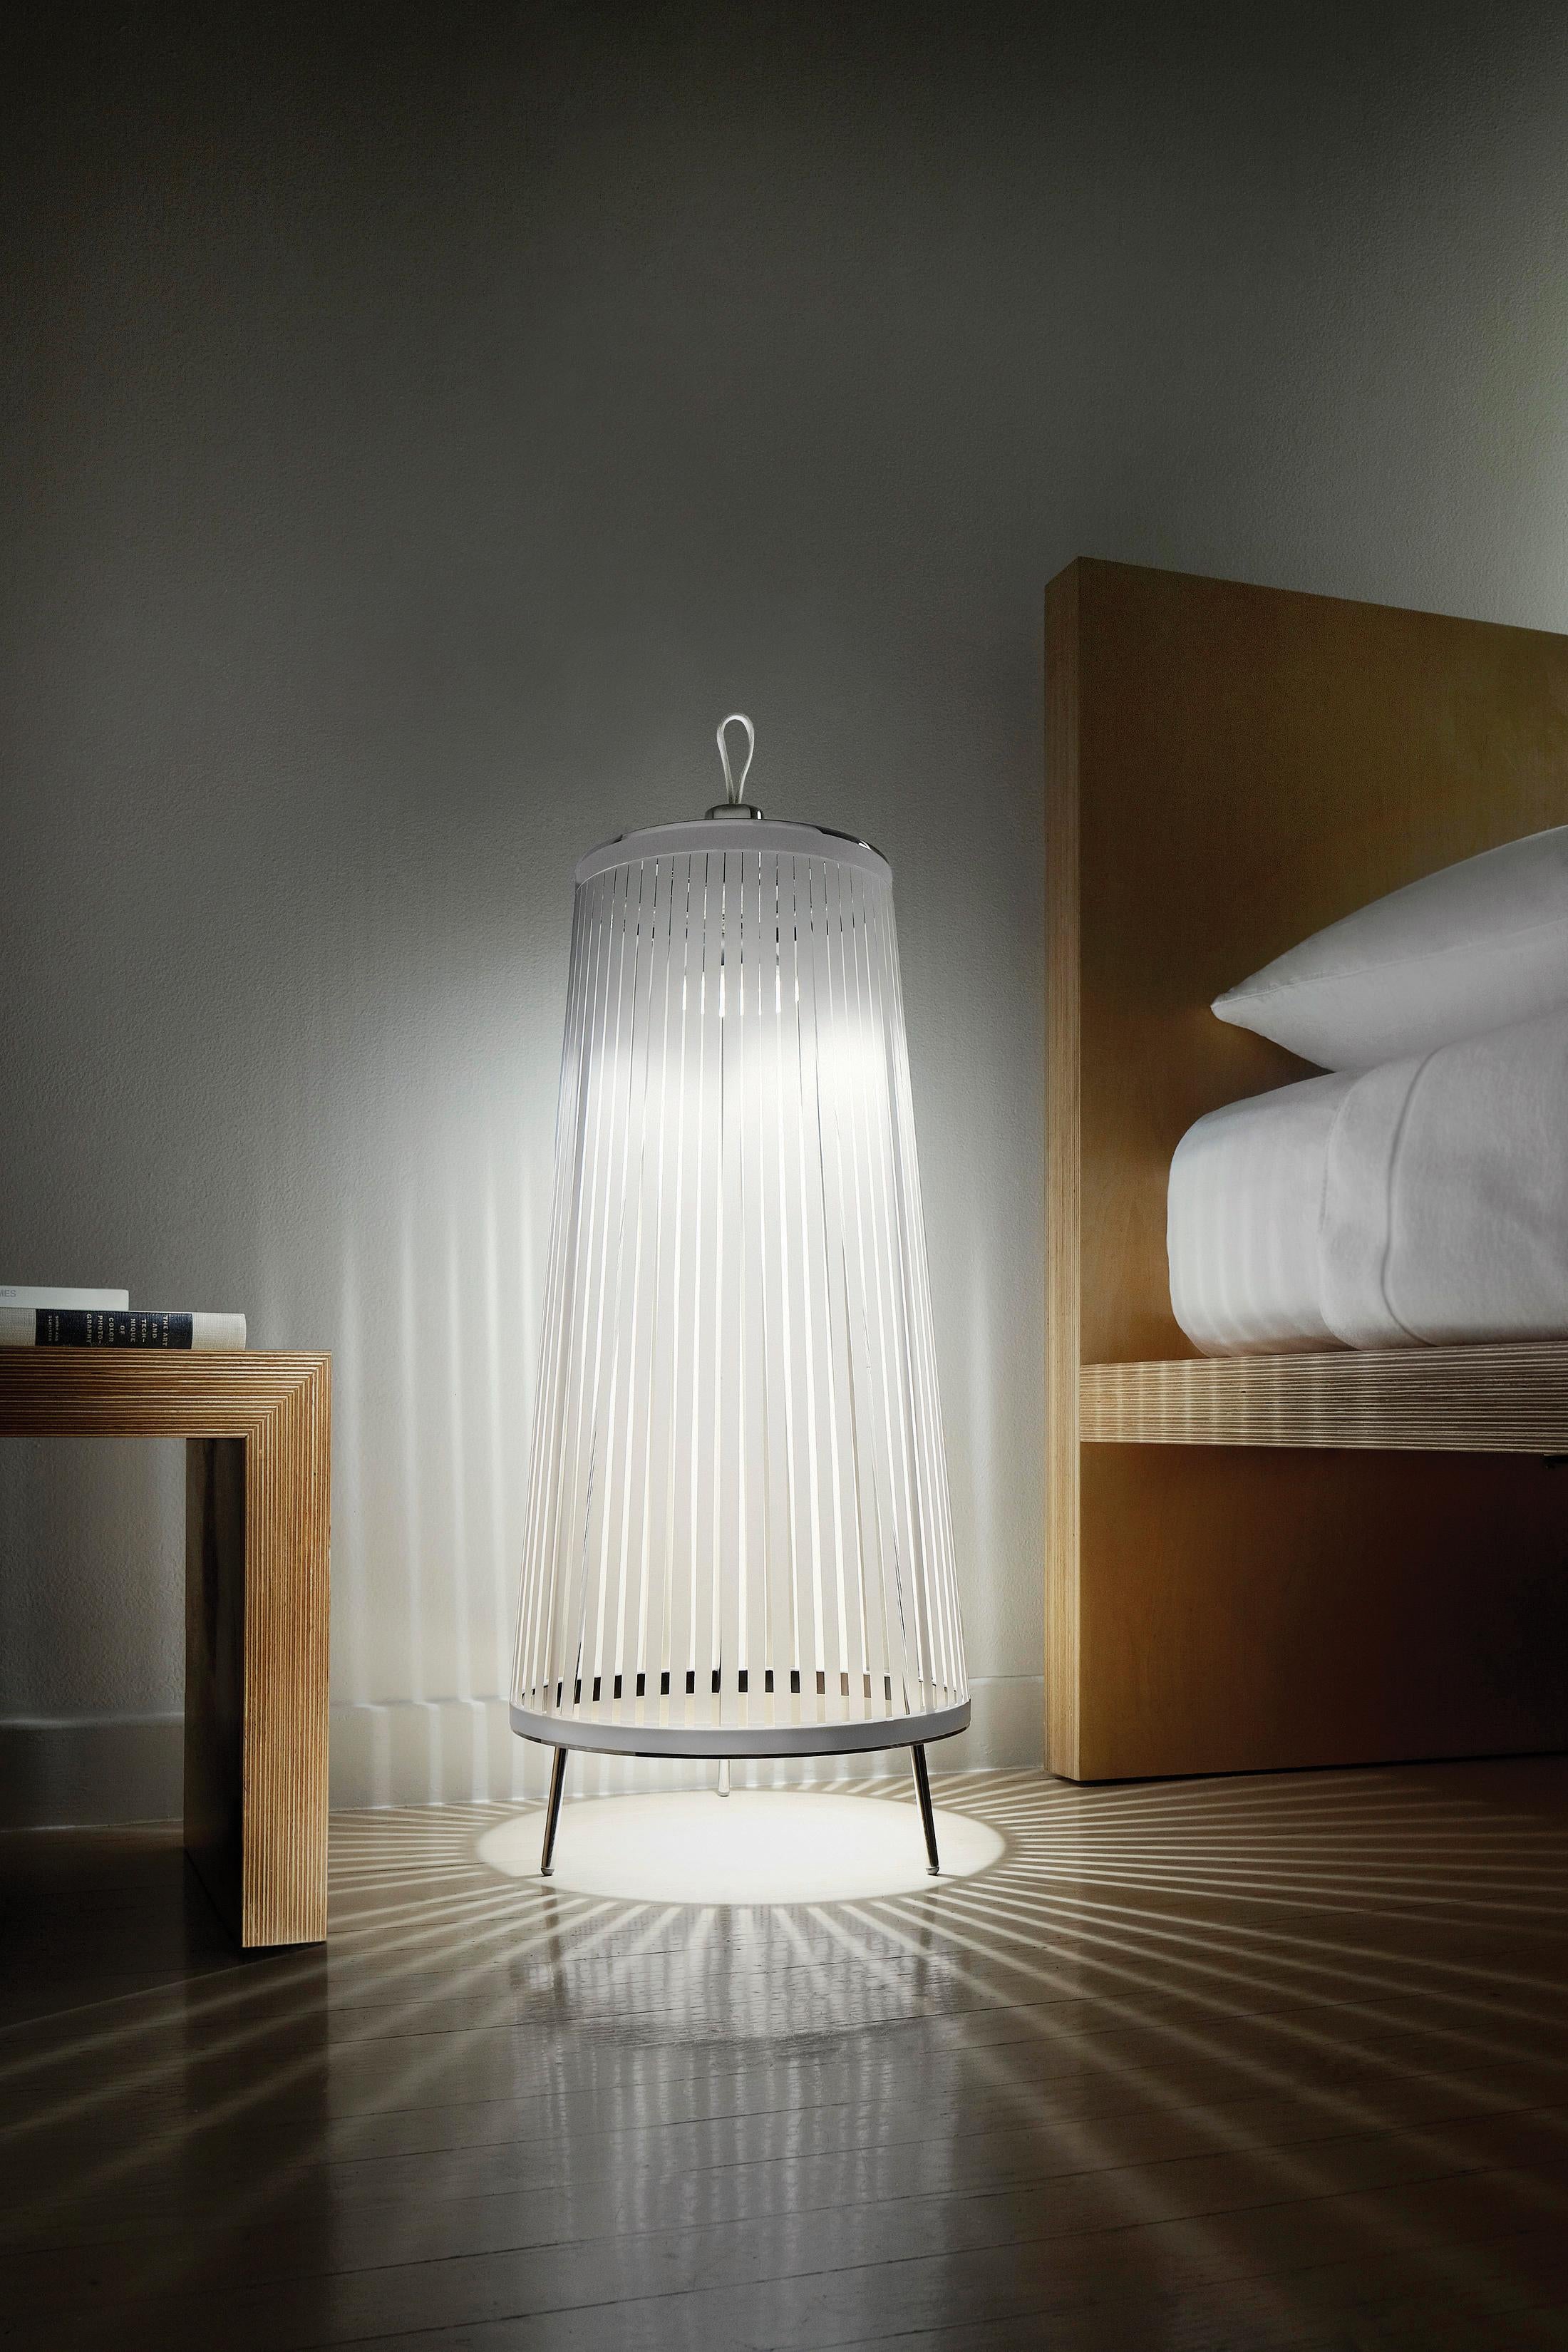 American Solis 48 Freestanding Lamp in Brown by Pablo Designs